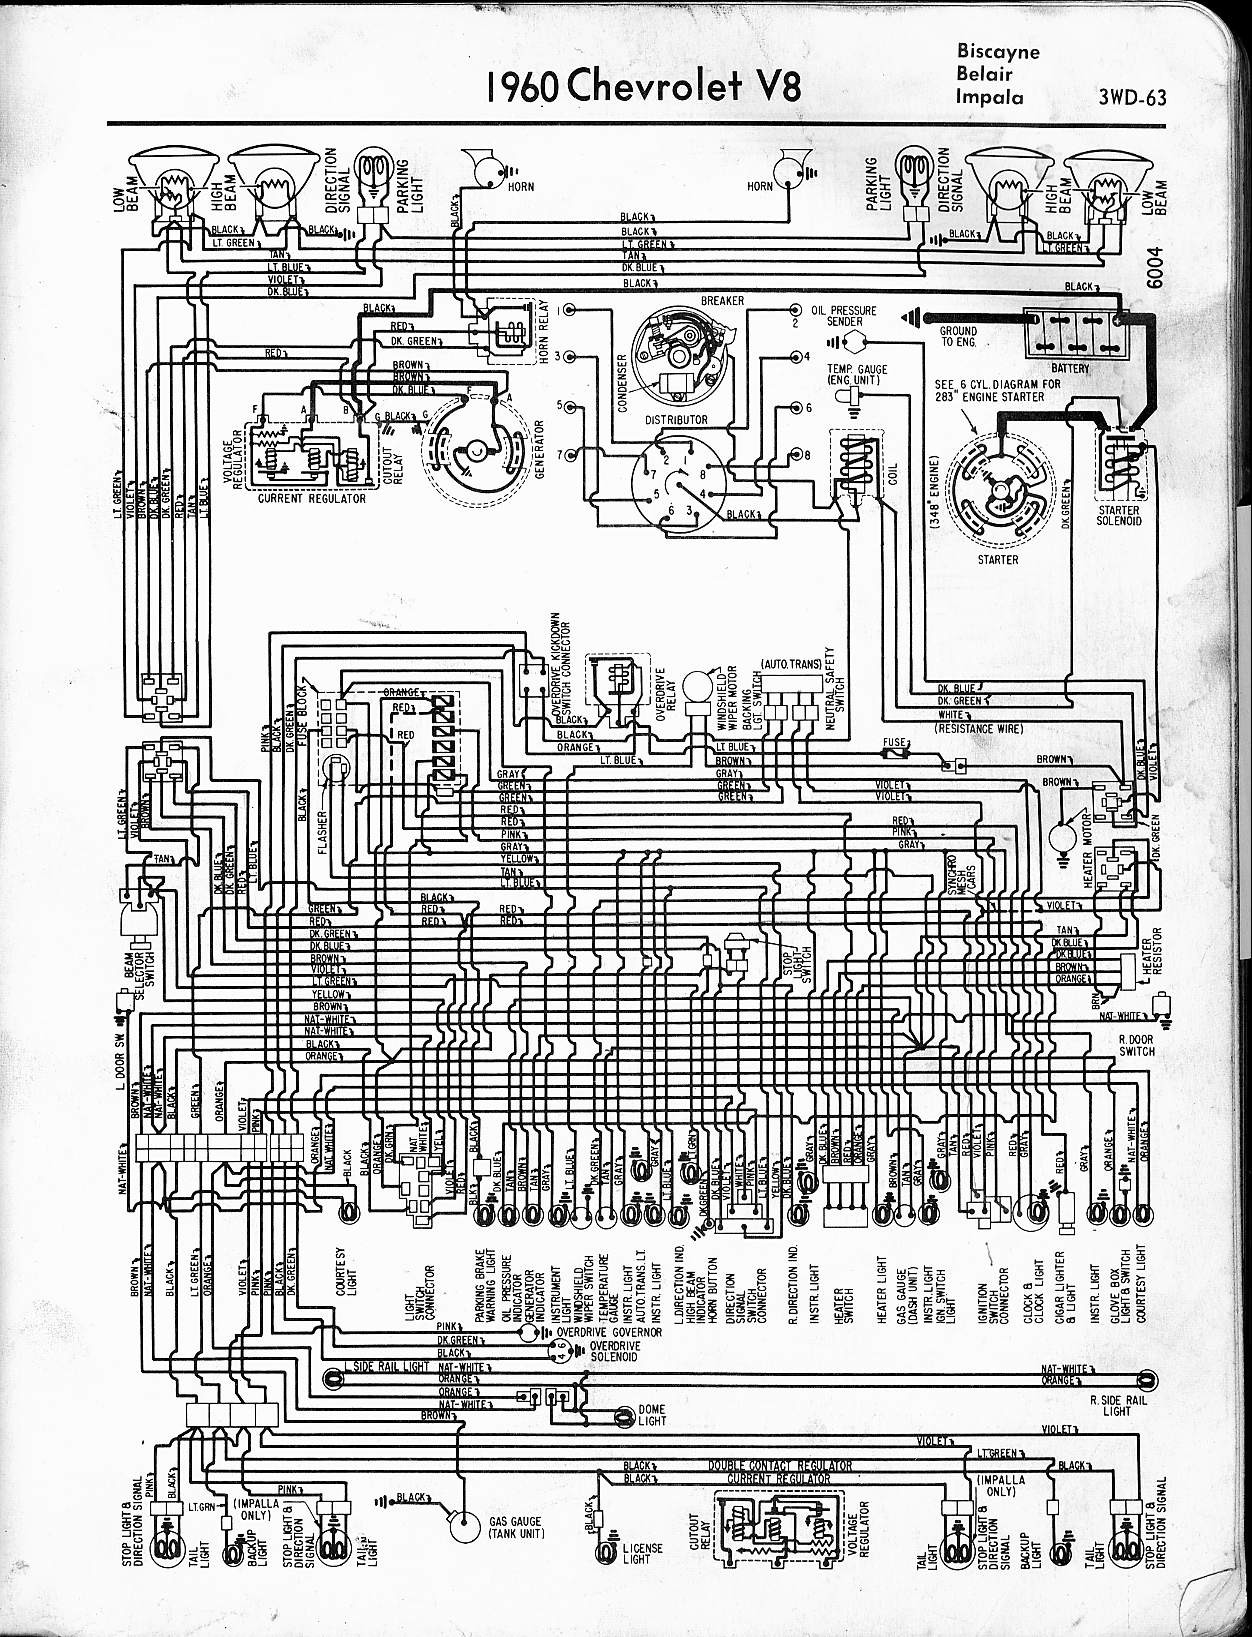 2001 Chevy Impala Engine Diagram 57 65 Chevy Wiring Diagrams